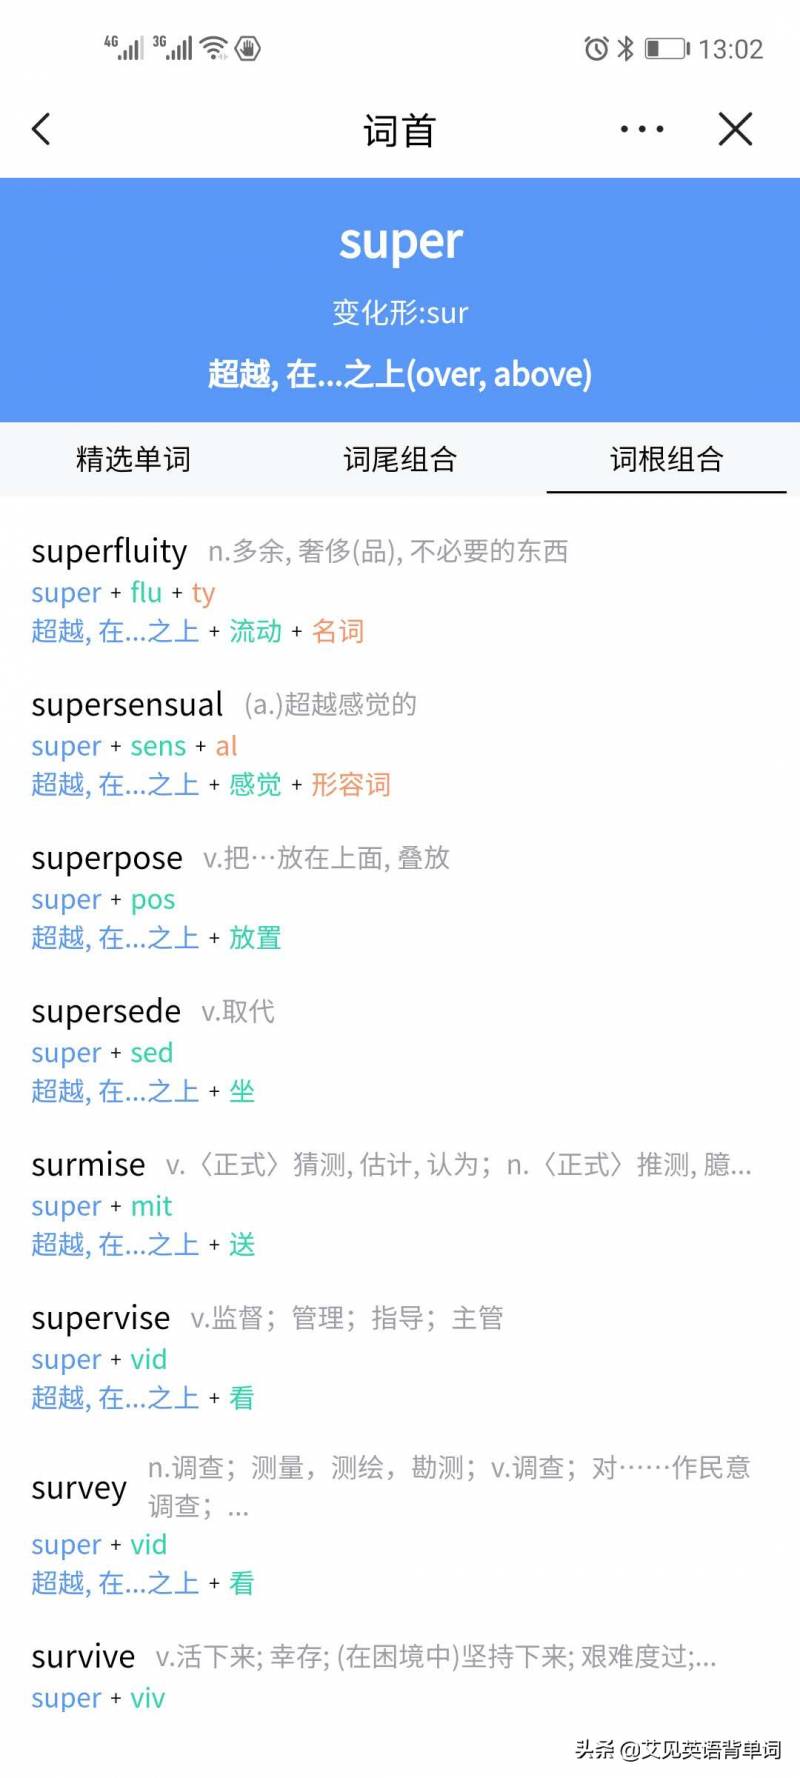 supreme是什么意思中文叫什么？